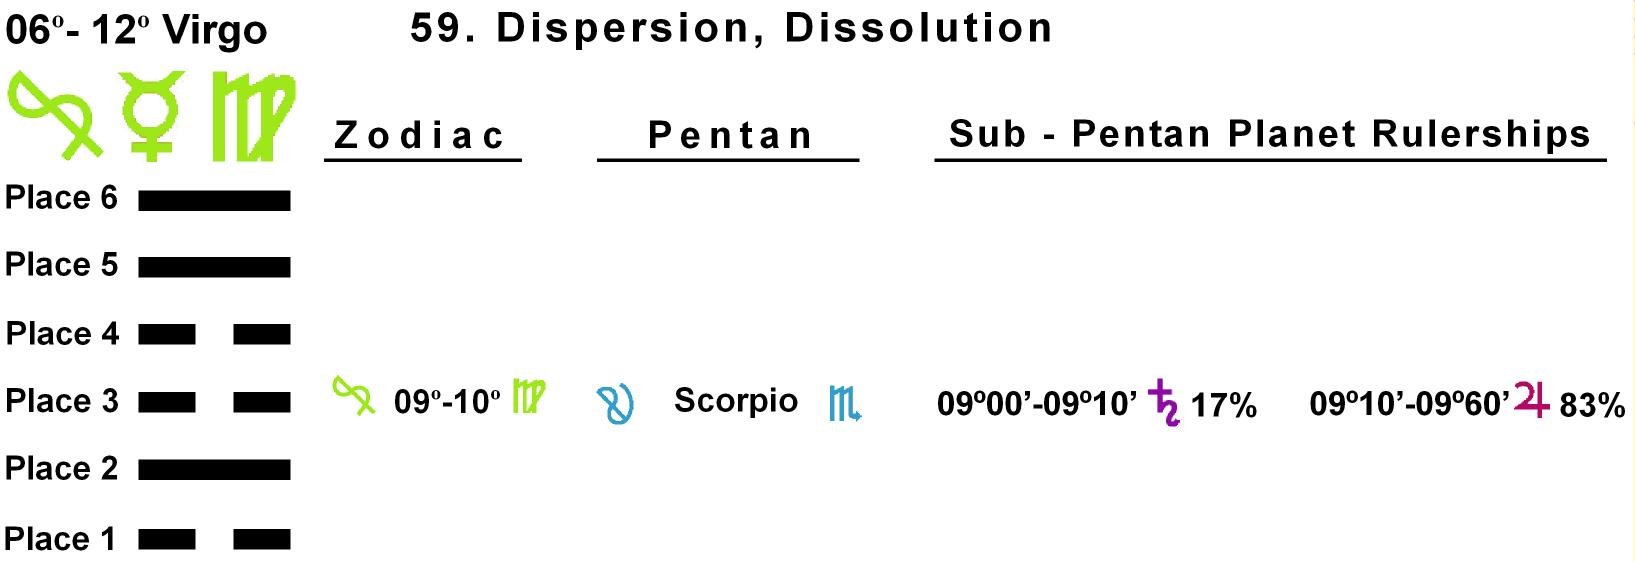 Pent-lines-06VI 09-10 Hx-59 Dispersion